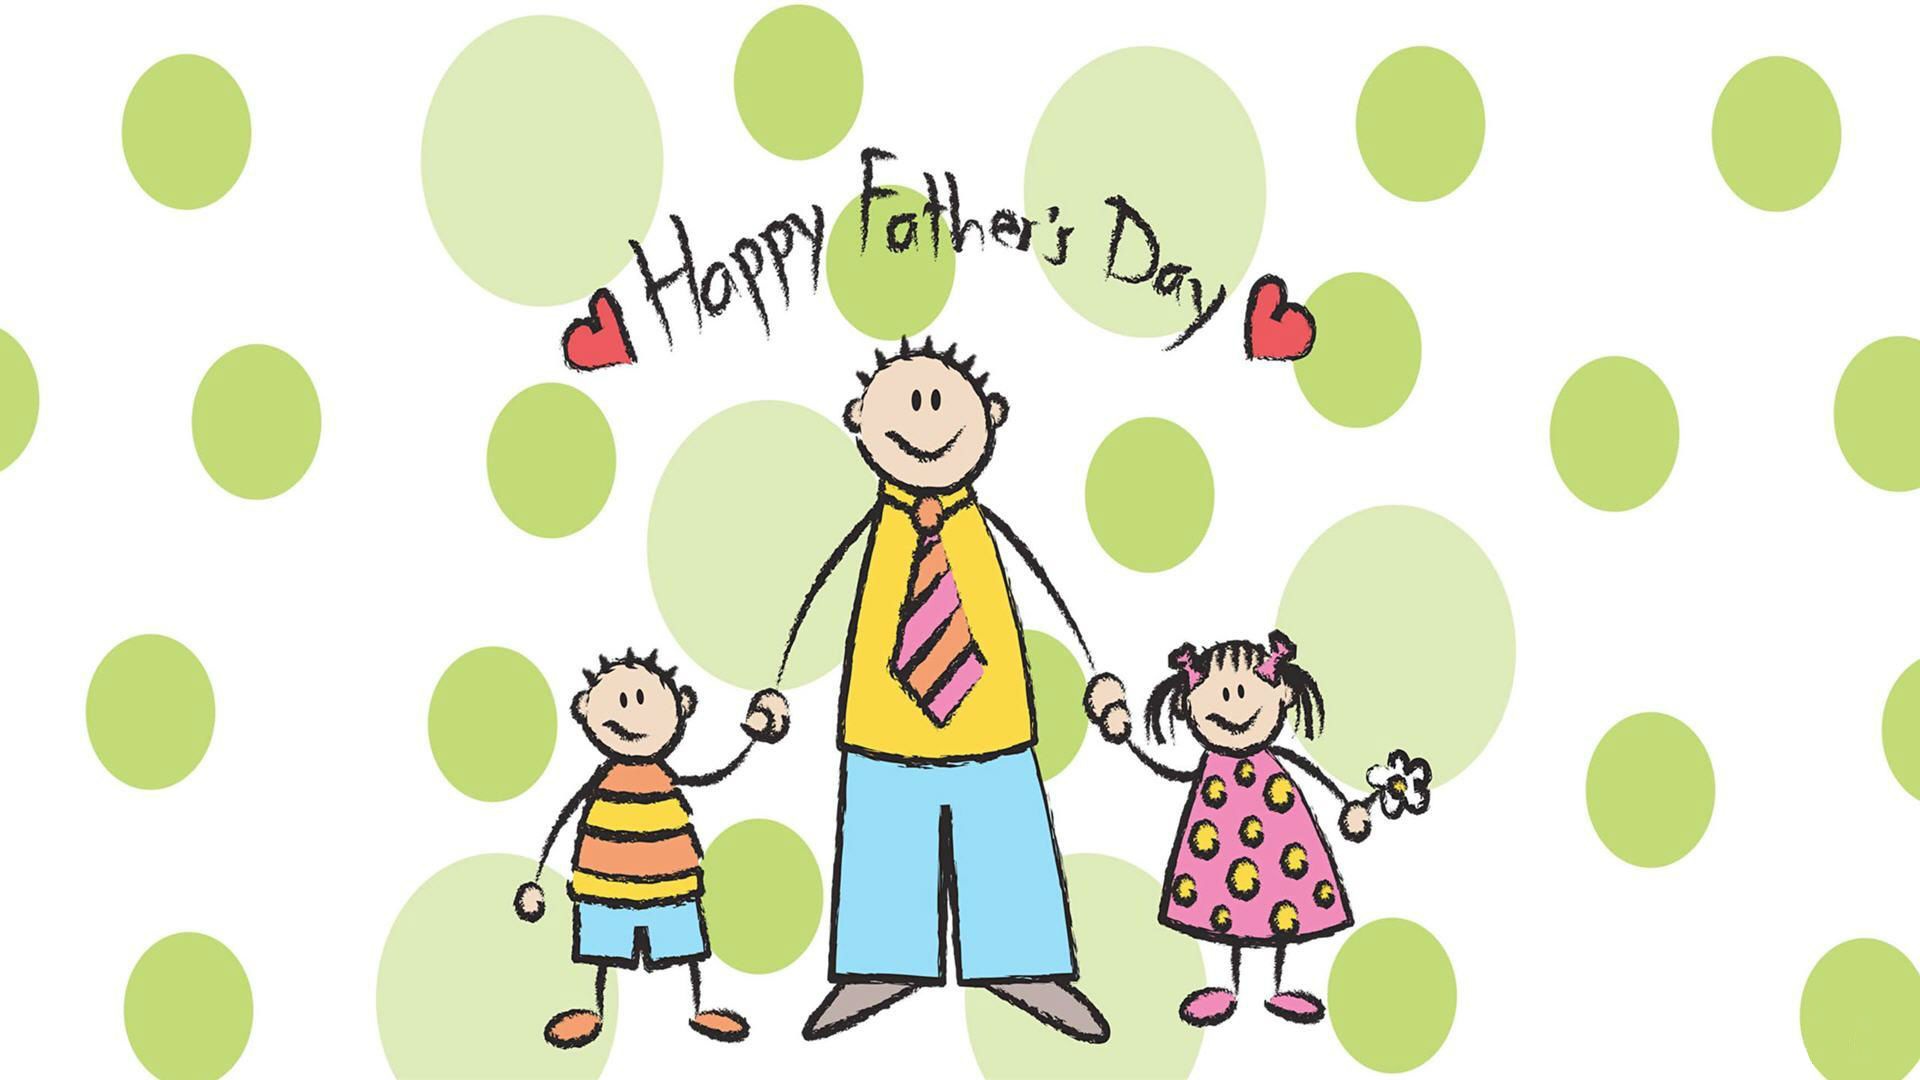 Happy Fathers Day Fun - 1920x1080 Wallpaper 